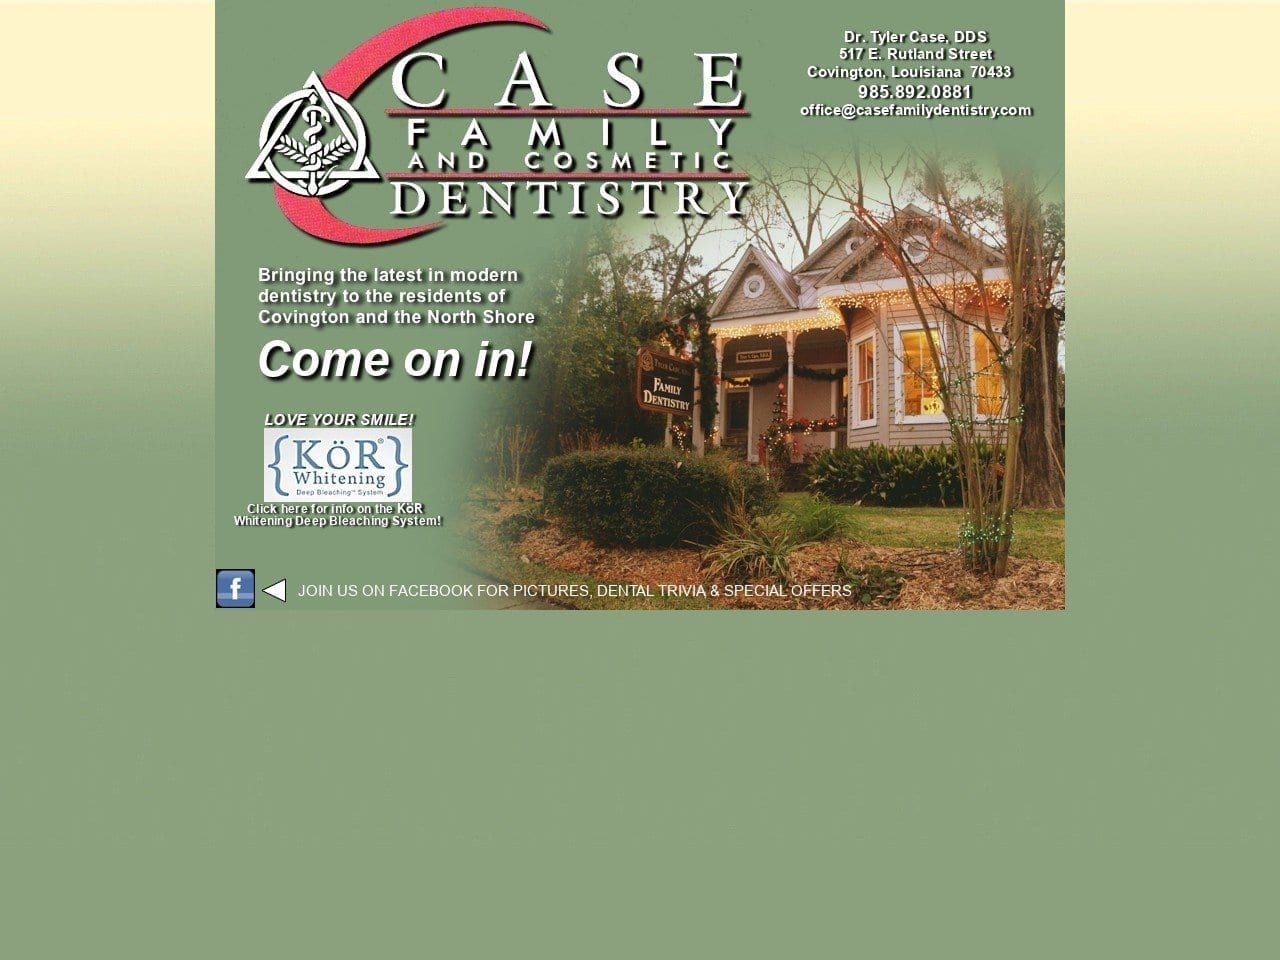 Case Family Dentistry Website Screenshot from casefamilydentistry.com